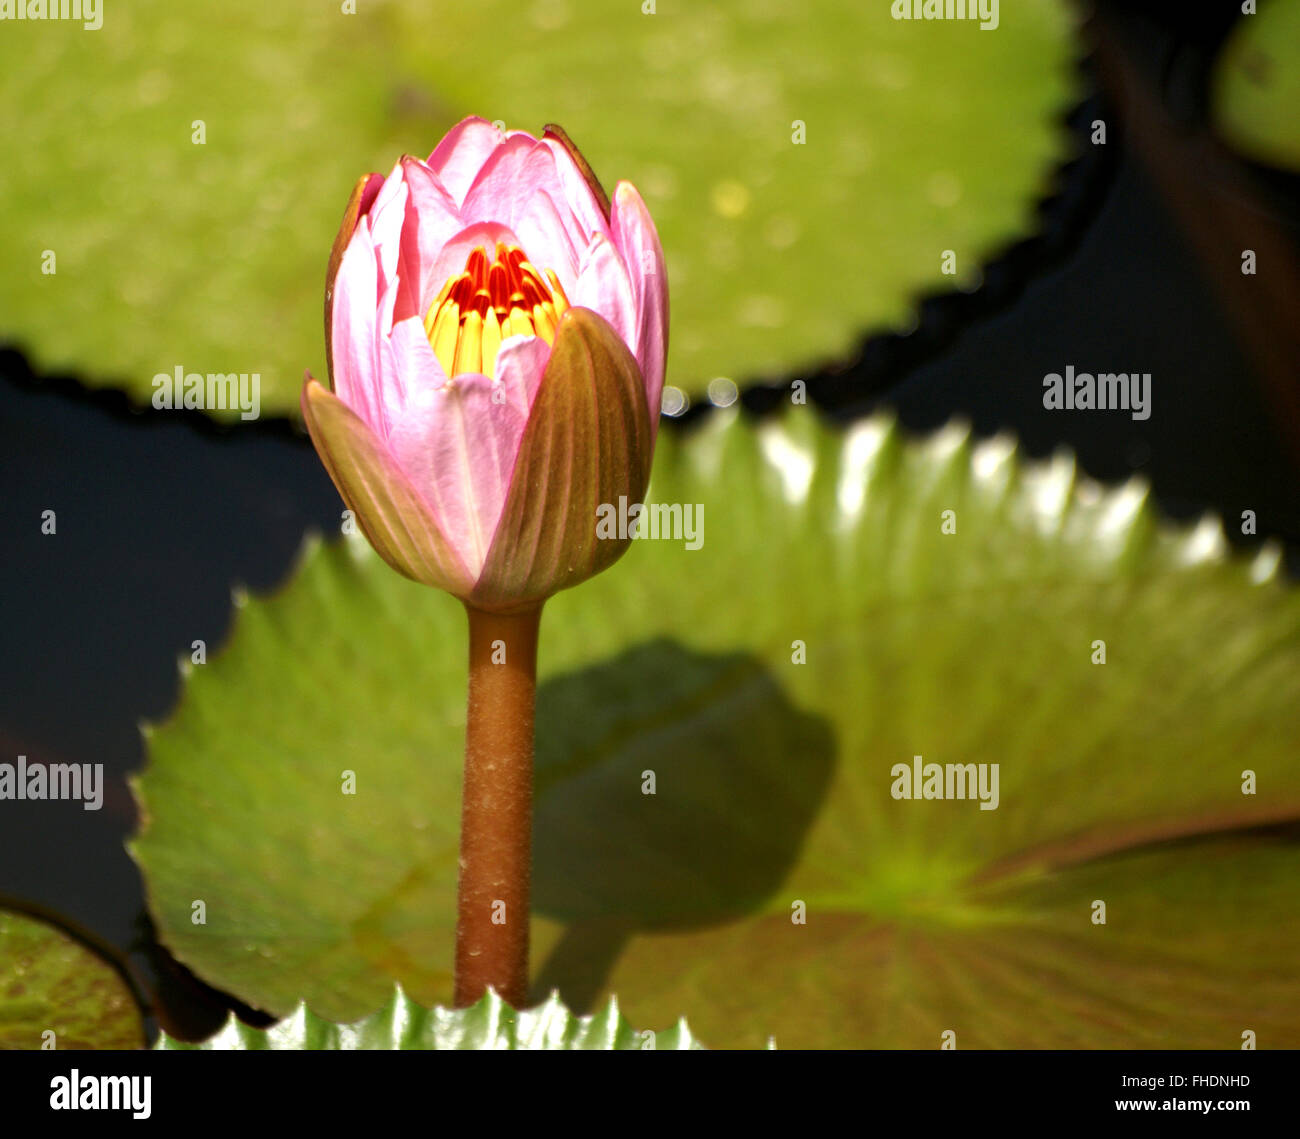 Nymphaea pubescens, peludo, lirio de agua lirio de agua rosada, acuática rhizomatous planta con hojas finamente dentadas redondeadas, flor rosa Foto de stock